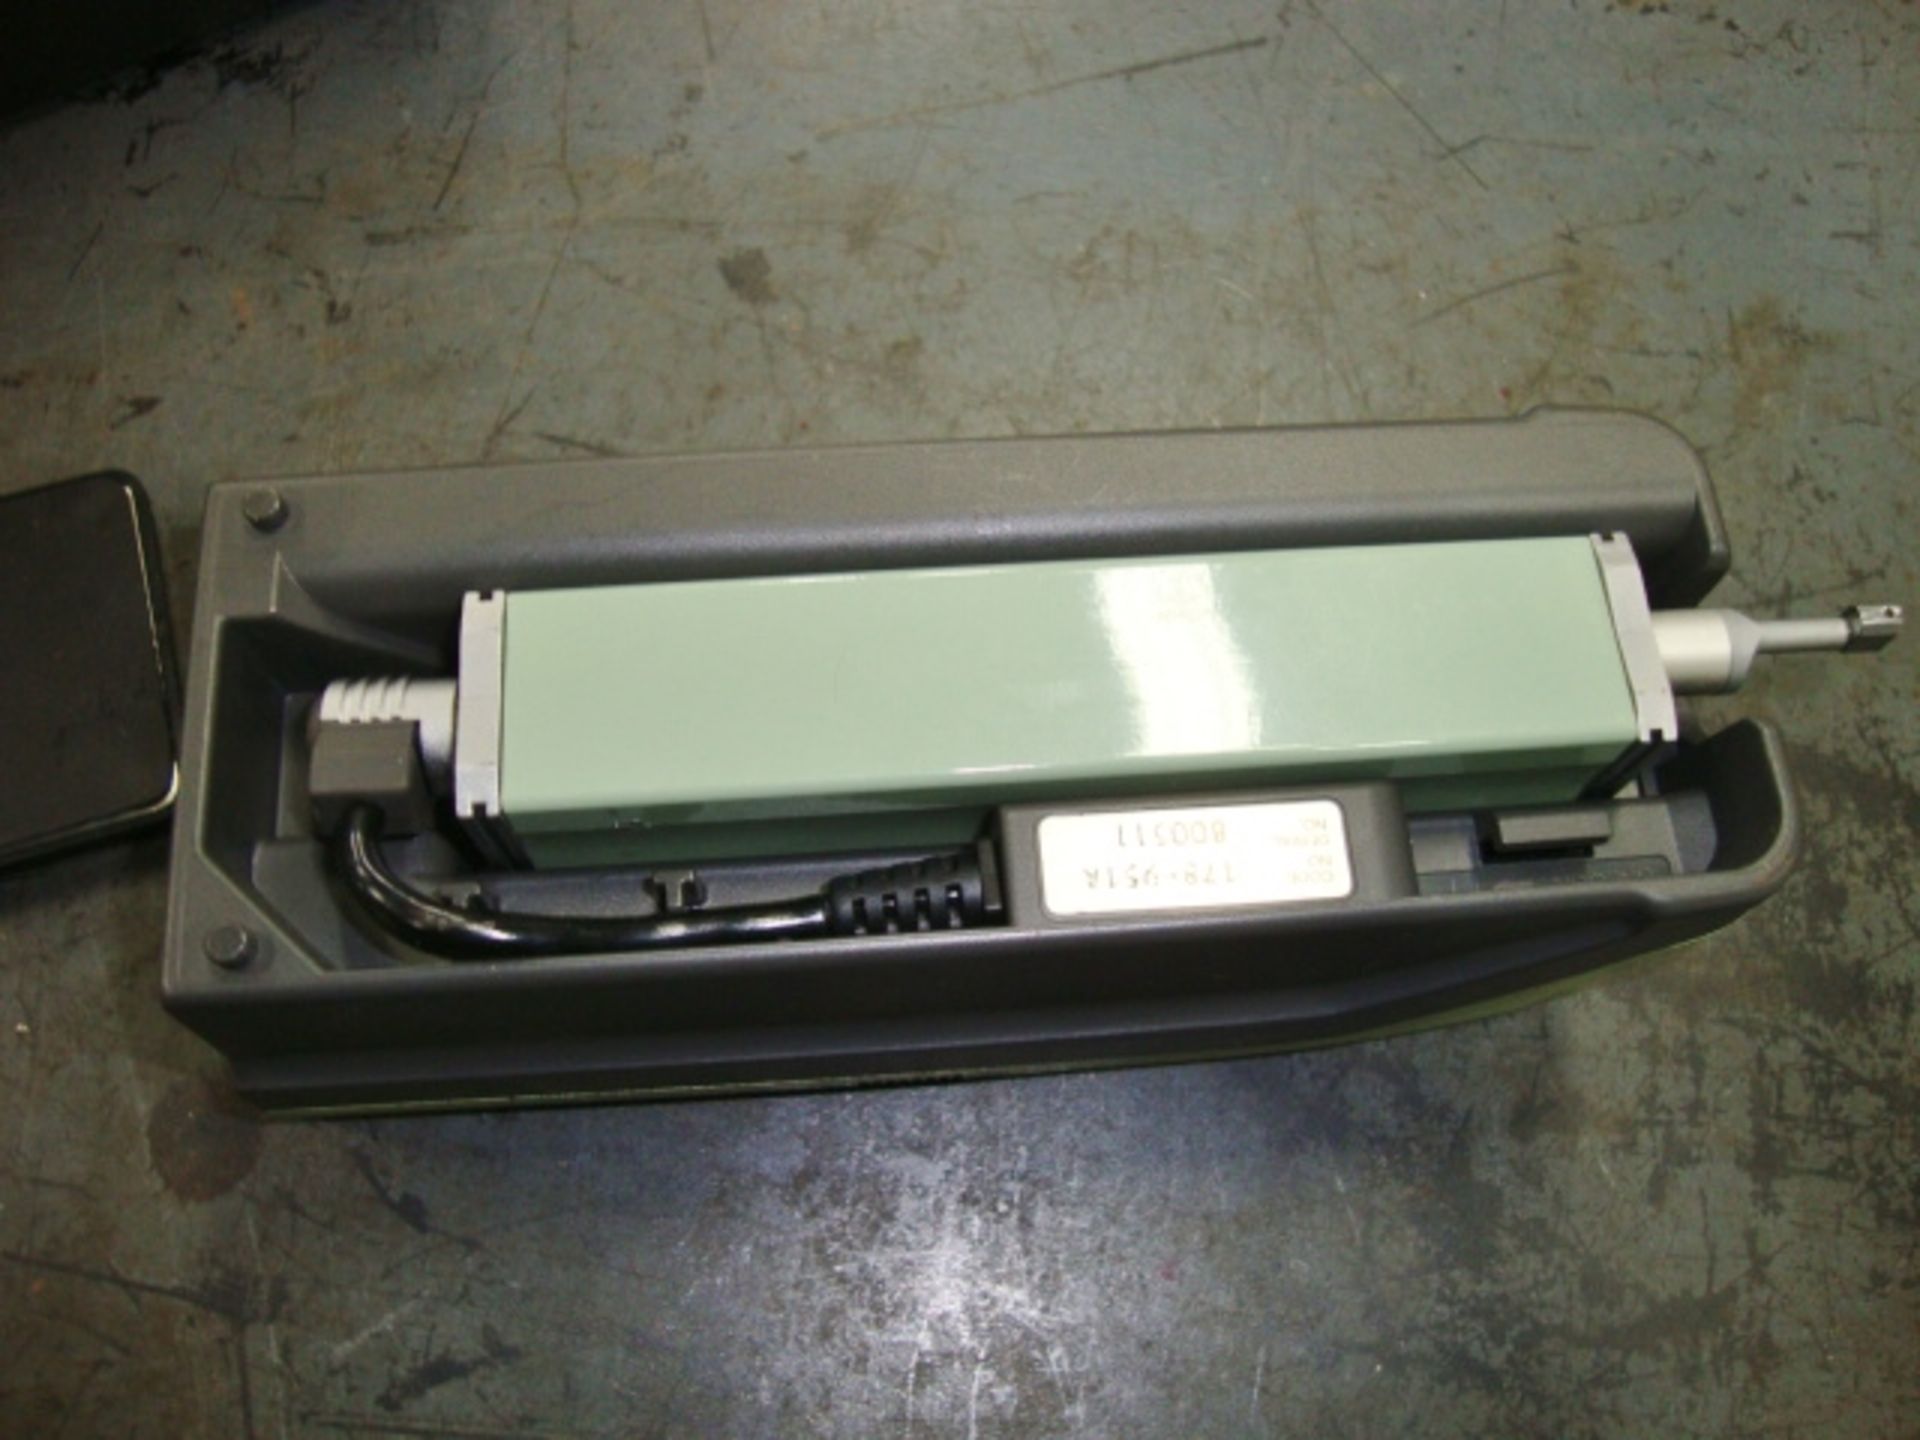 Mitutoyo Profilometer Surface Finish Tester in Case, Model SJ-201 - Image 2 of 3